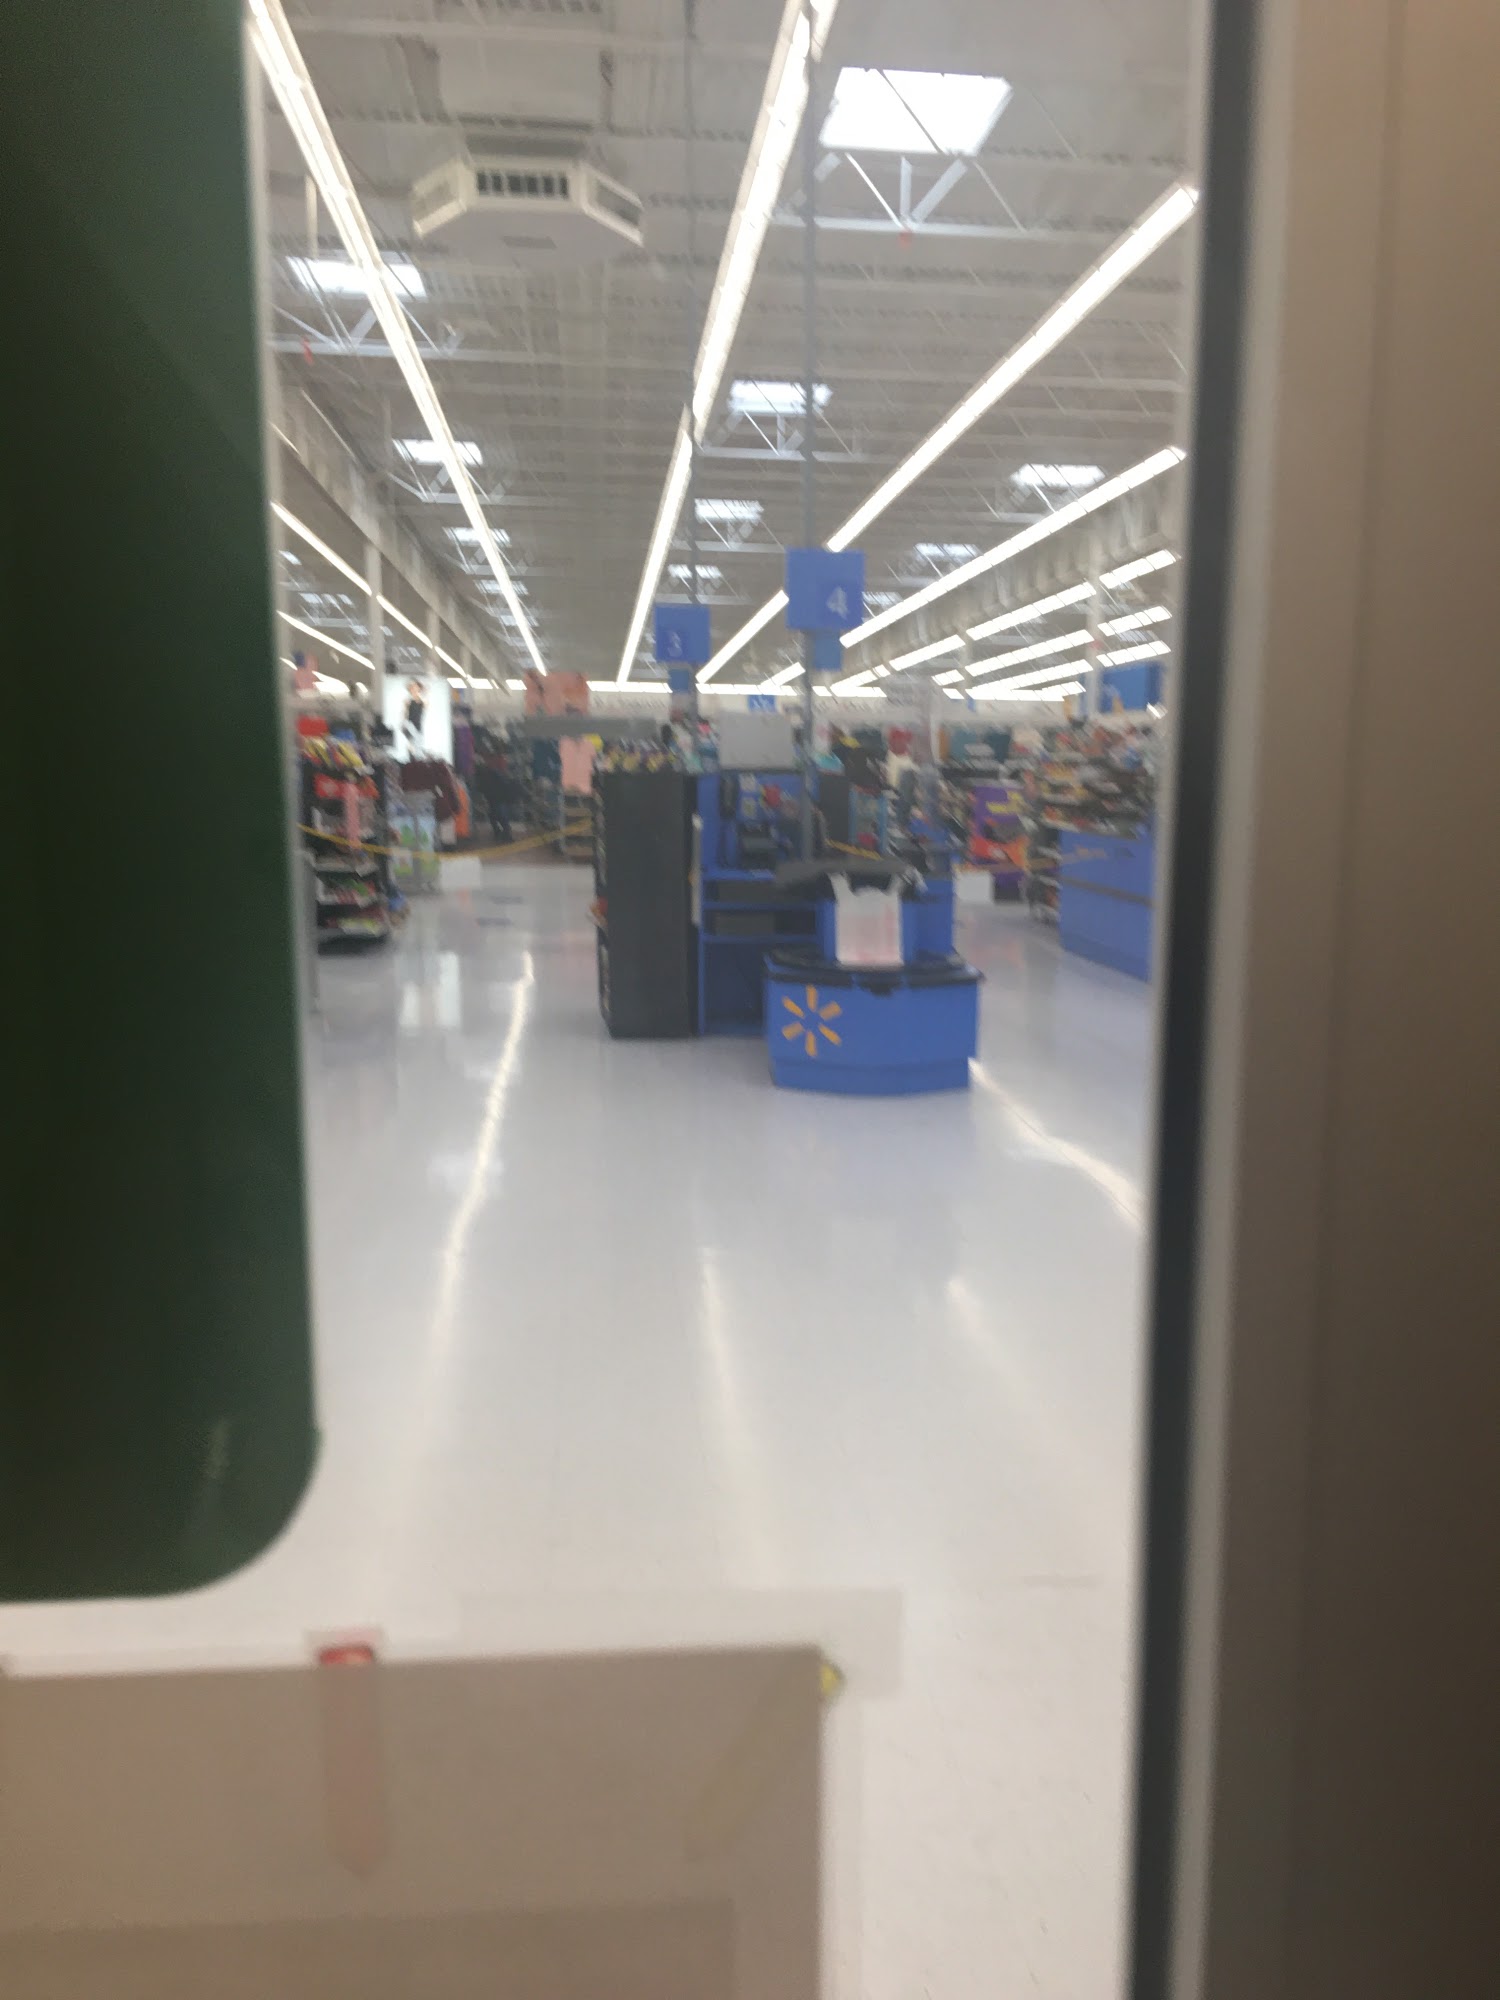 Quest Diagnostics Inside Walmart Store #605 in Savannah